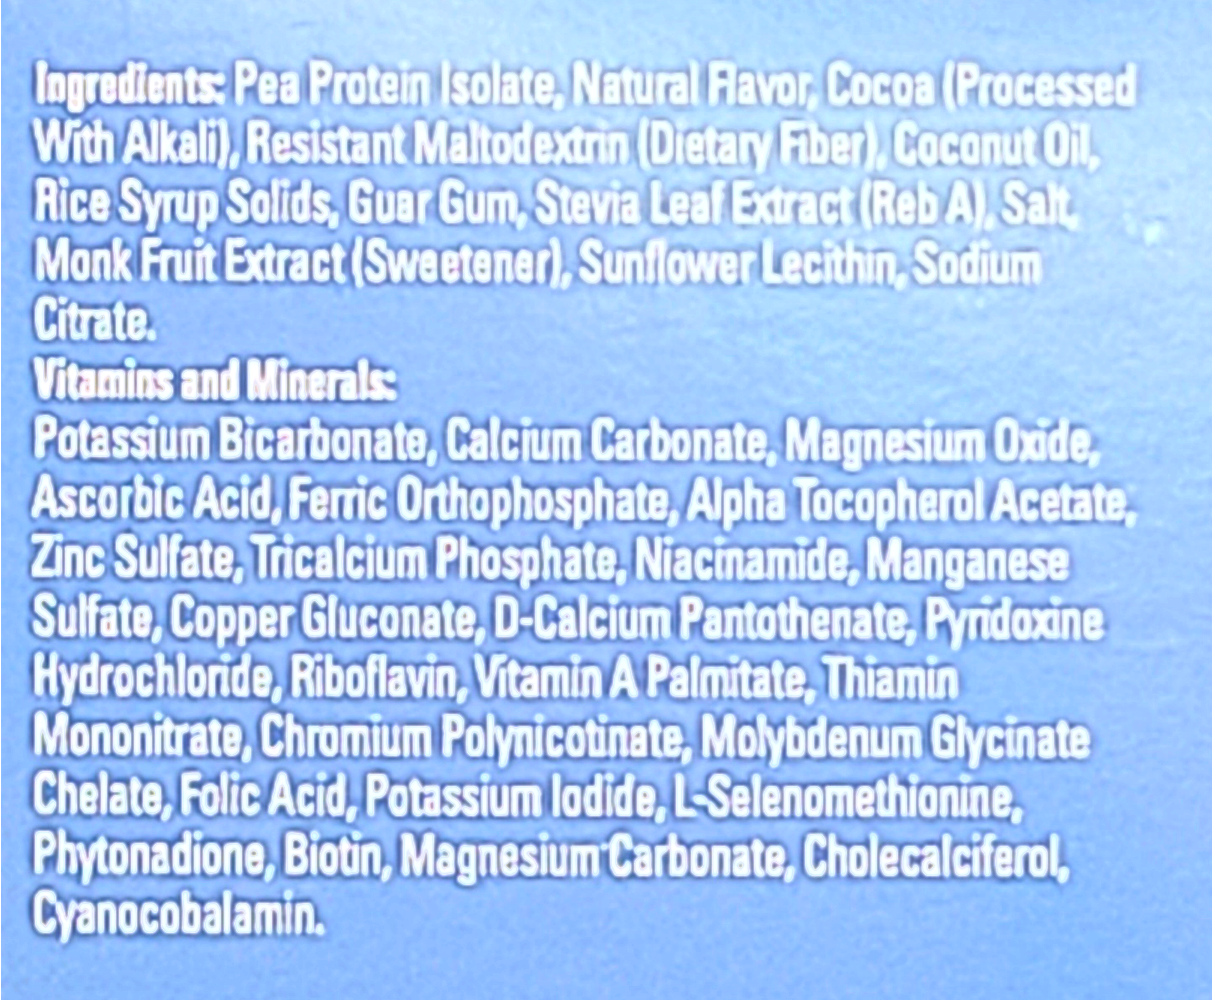 Chocolate Shake - Pea Protein